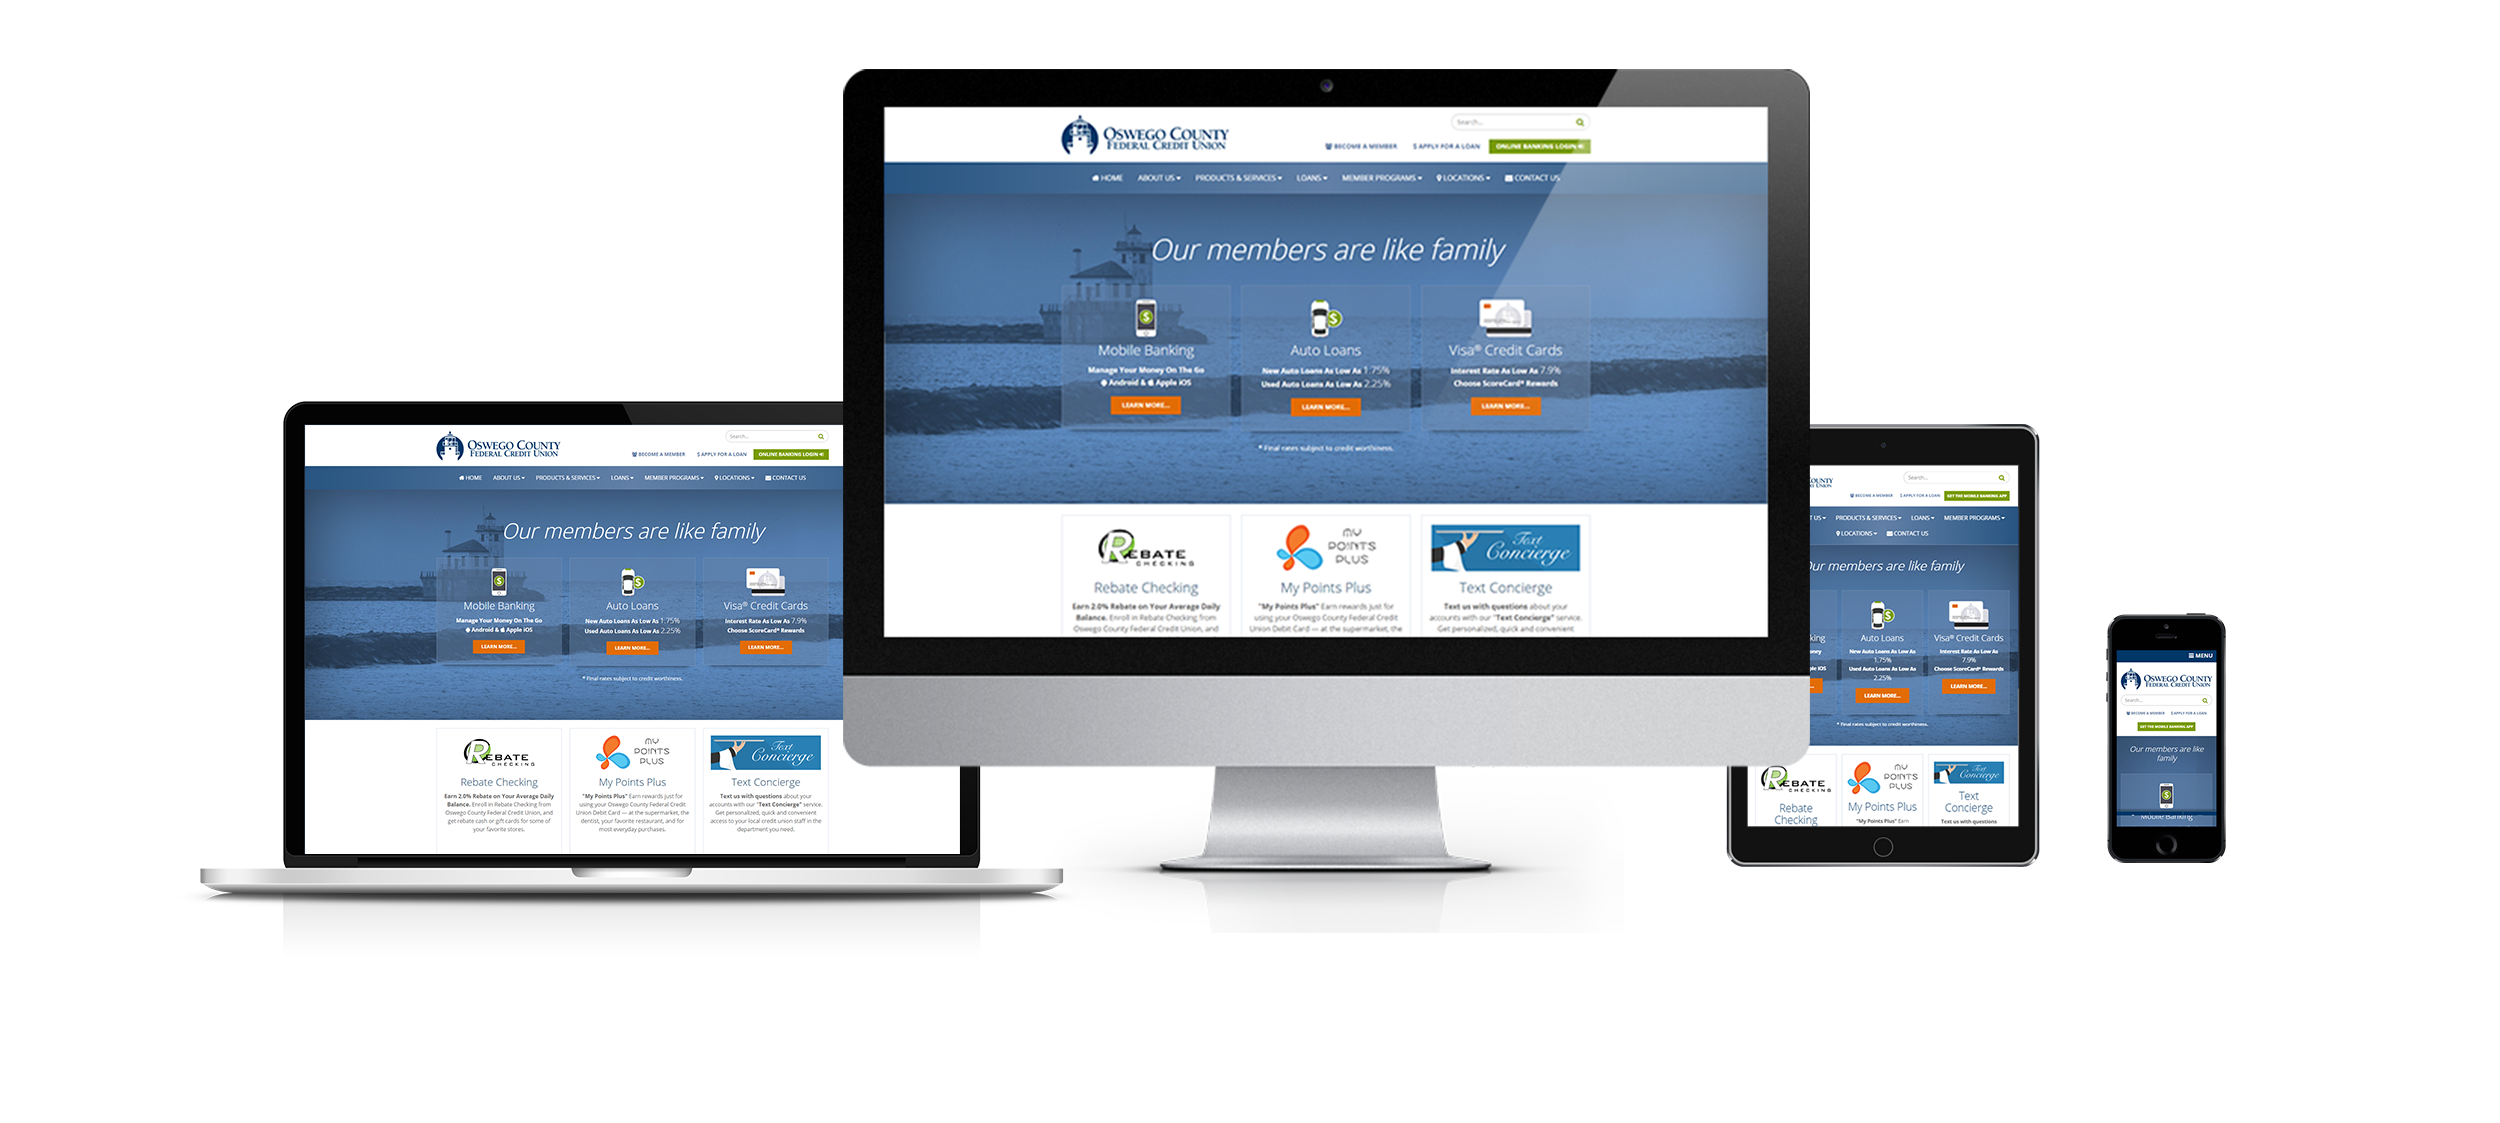 credit union website design responsive web design for oswego fcu from acs